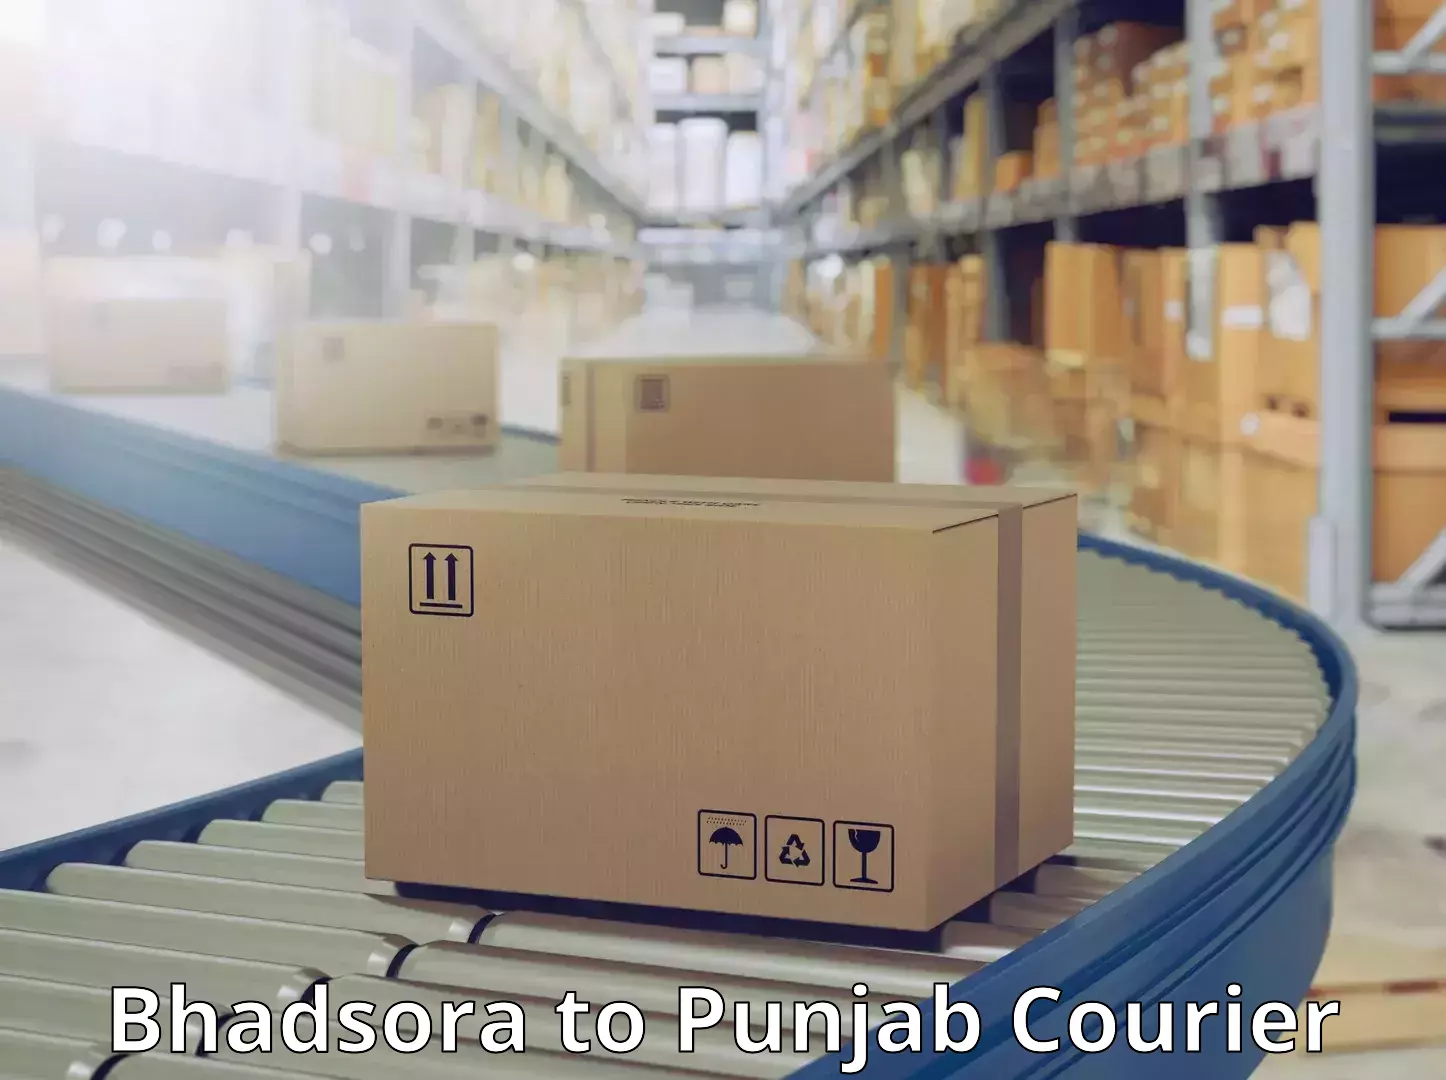 Courier service innovation Bhadsora to Malerkotla